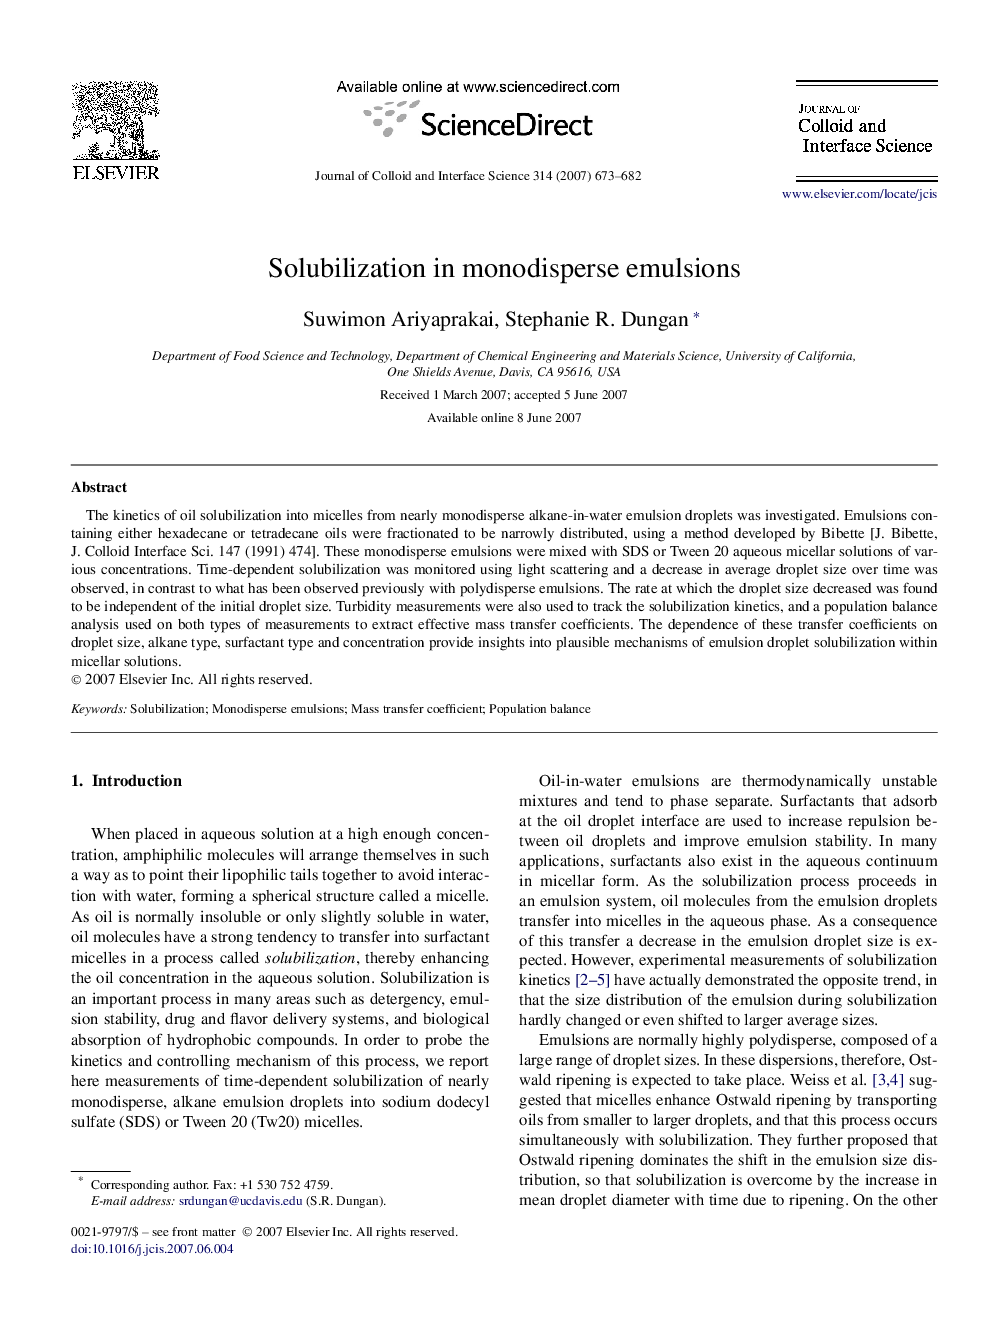 Solubilization in monodisperse emulsions